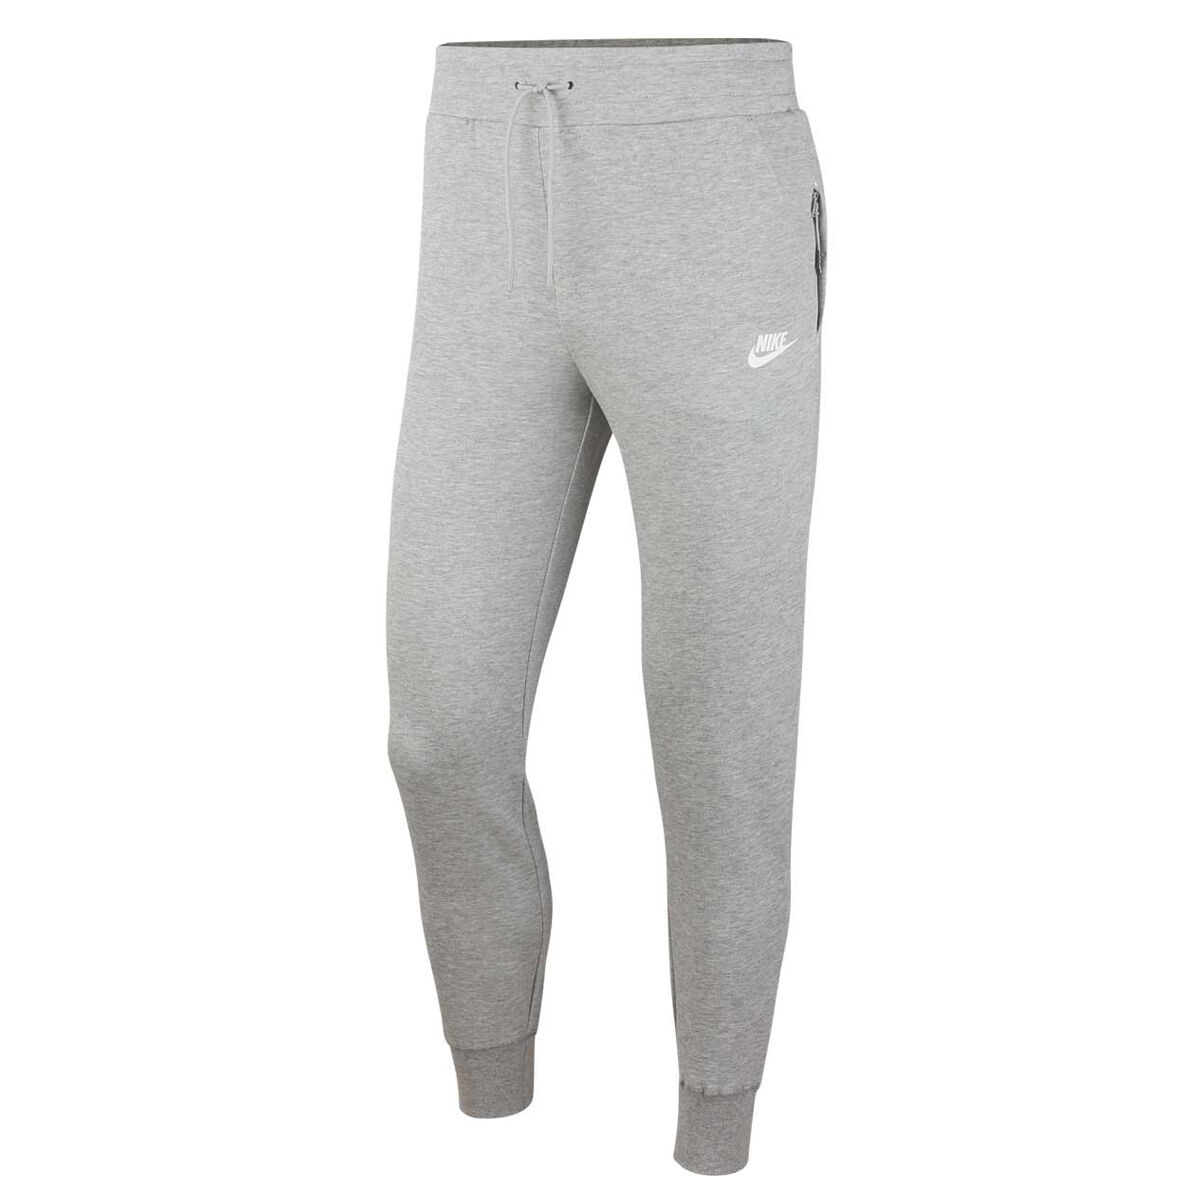 nike tech fleece pants women's grey